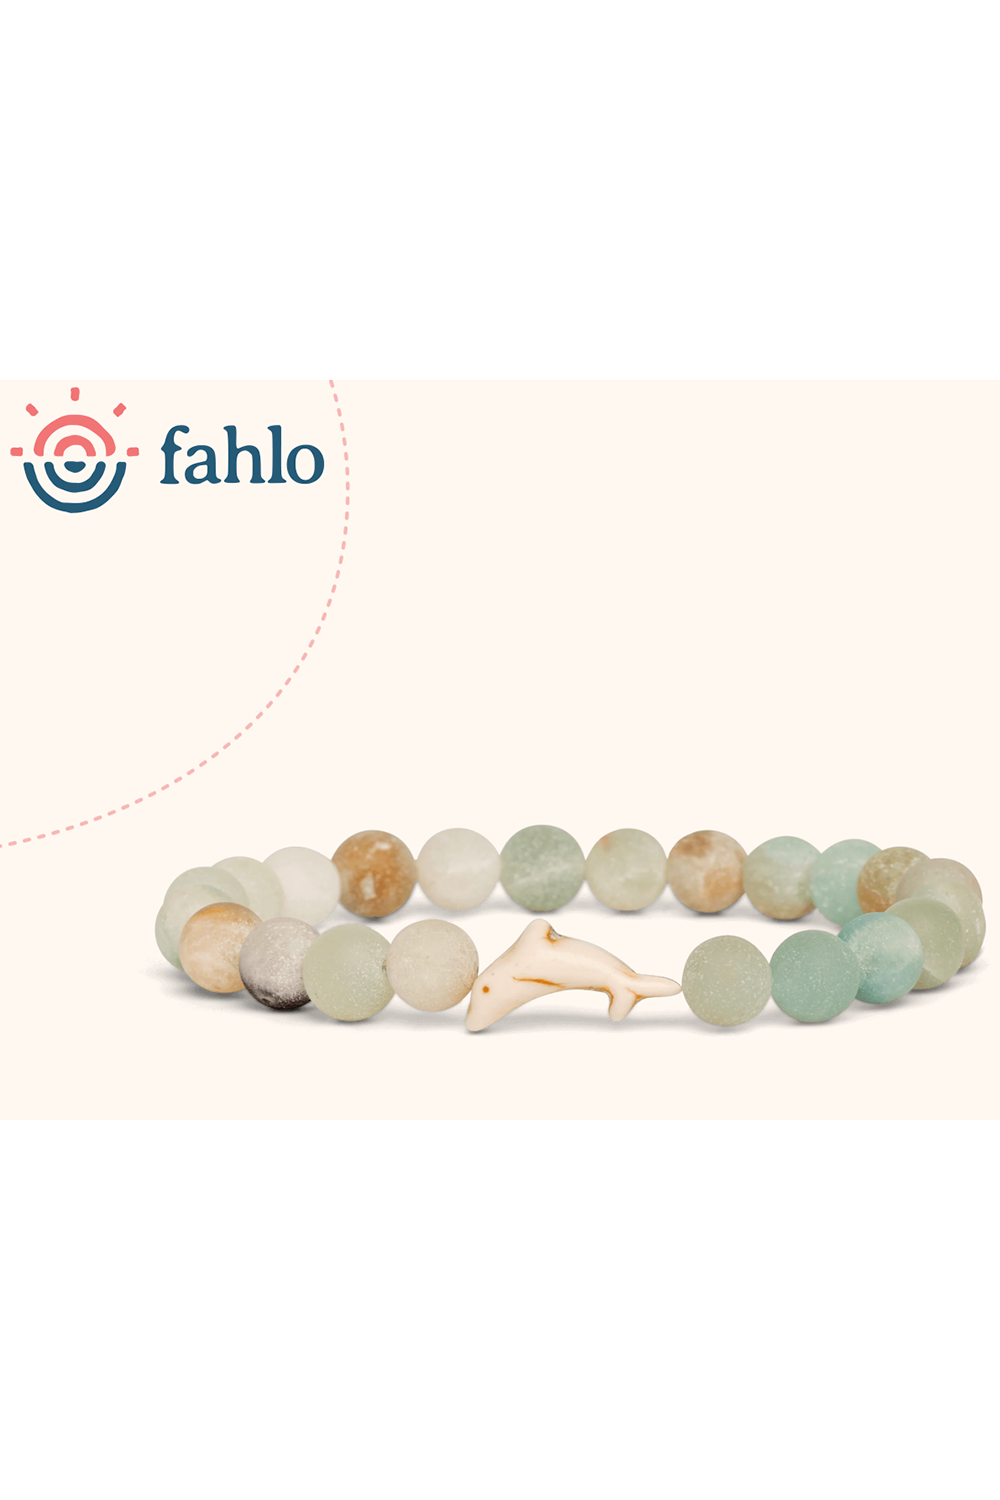 Fahlo Odyssey Bracelet - Skystone